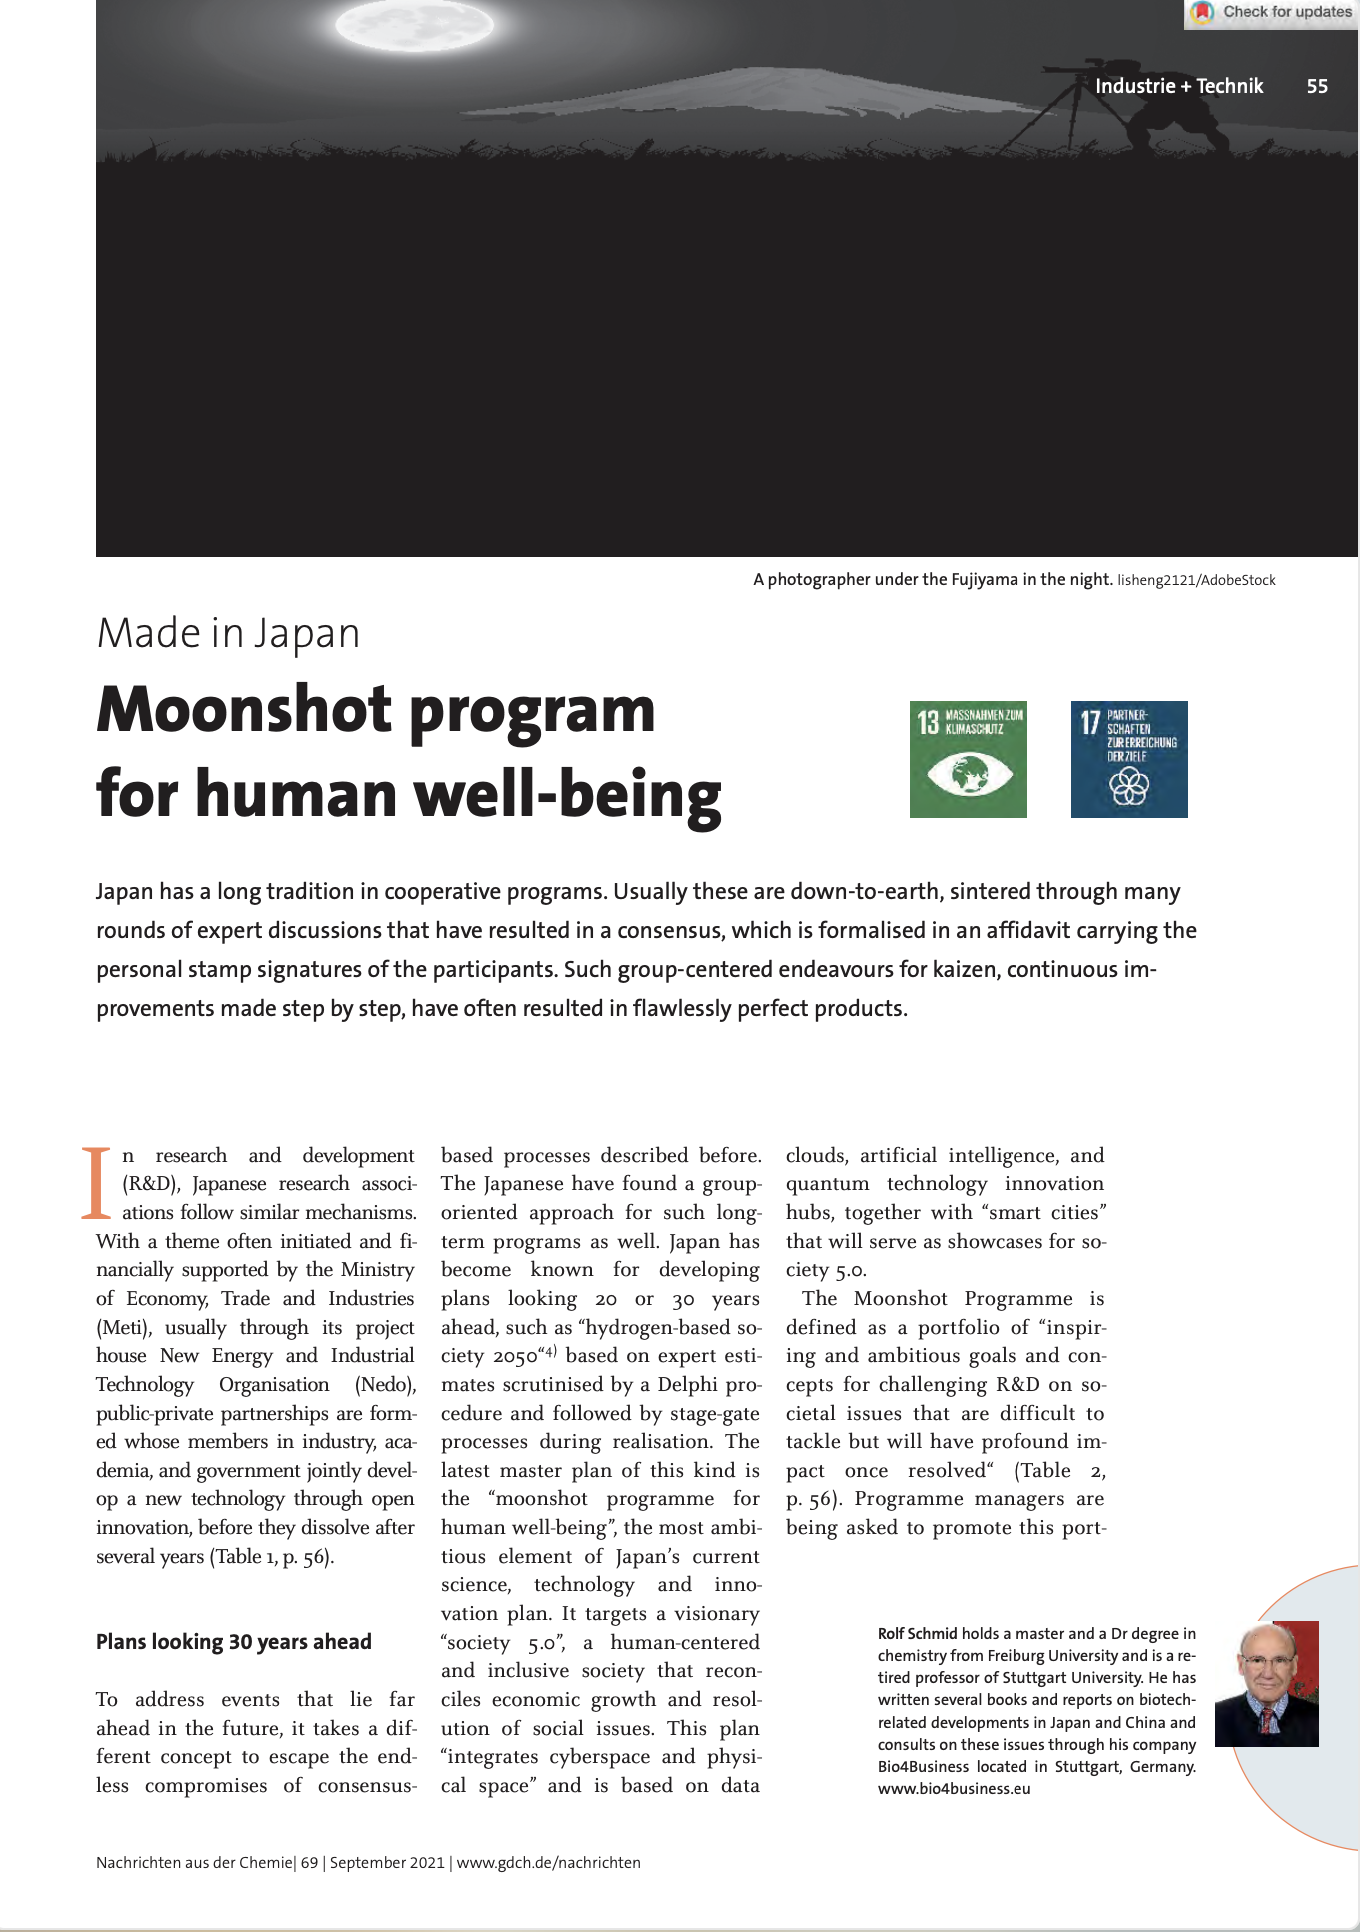 12-9 Moonshot program for human well-being